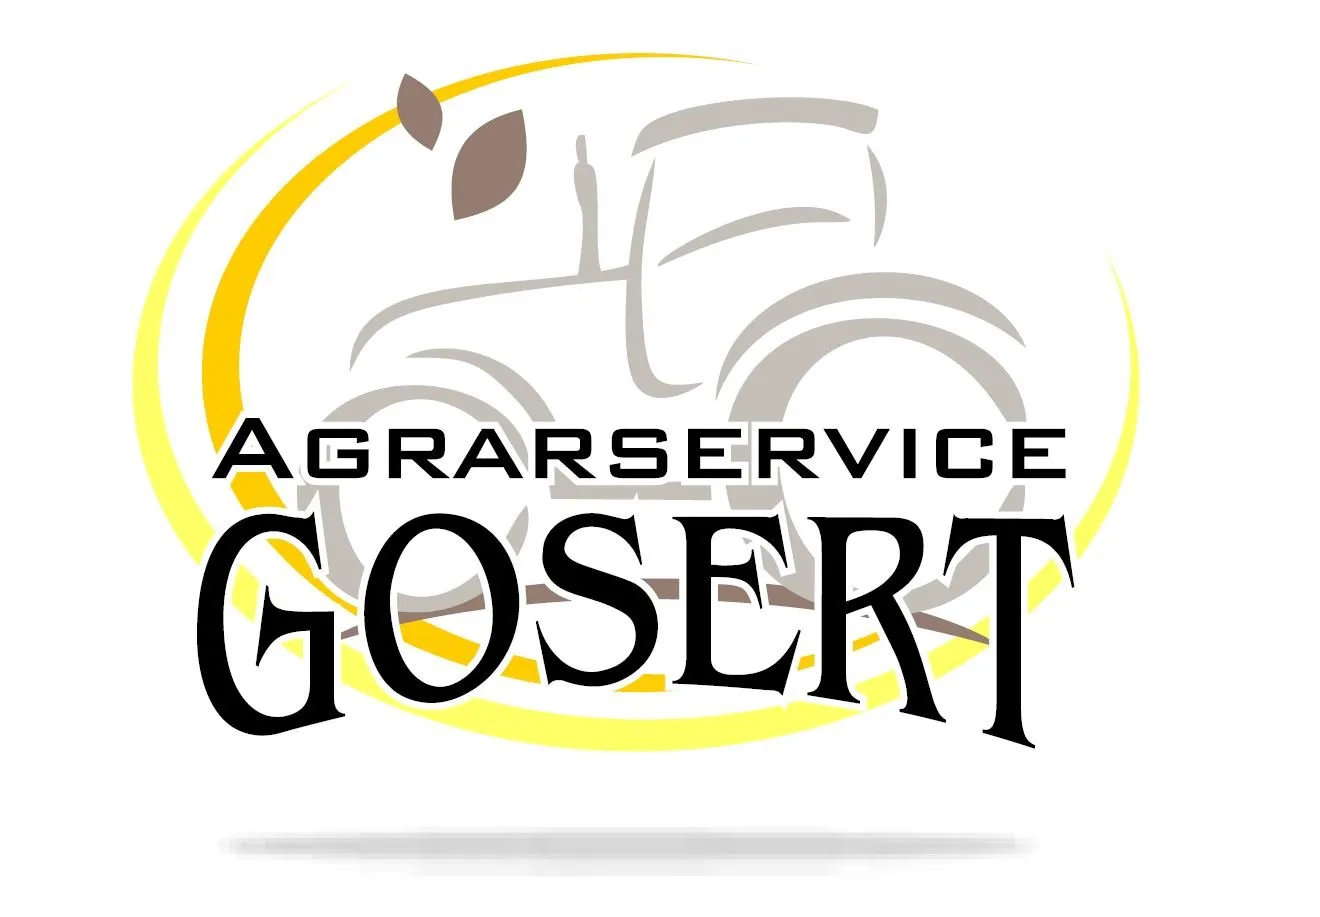 AgraserviceGosert-1920w